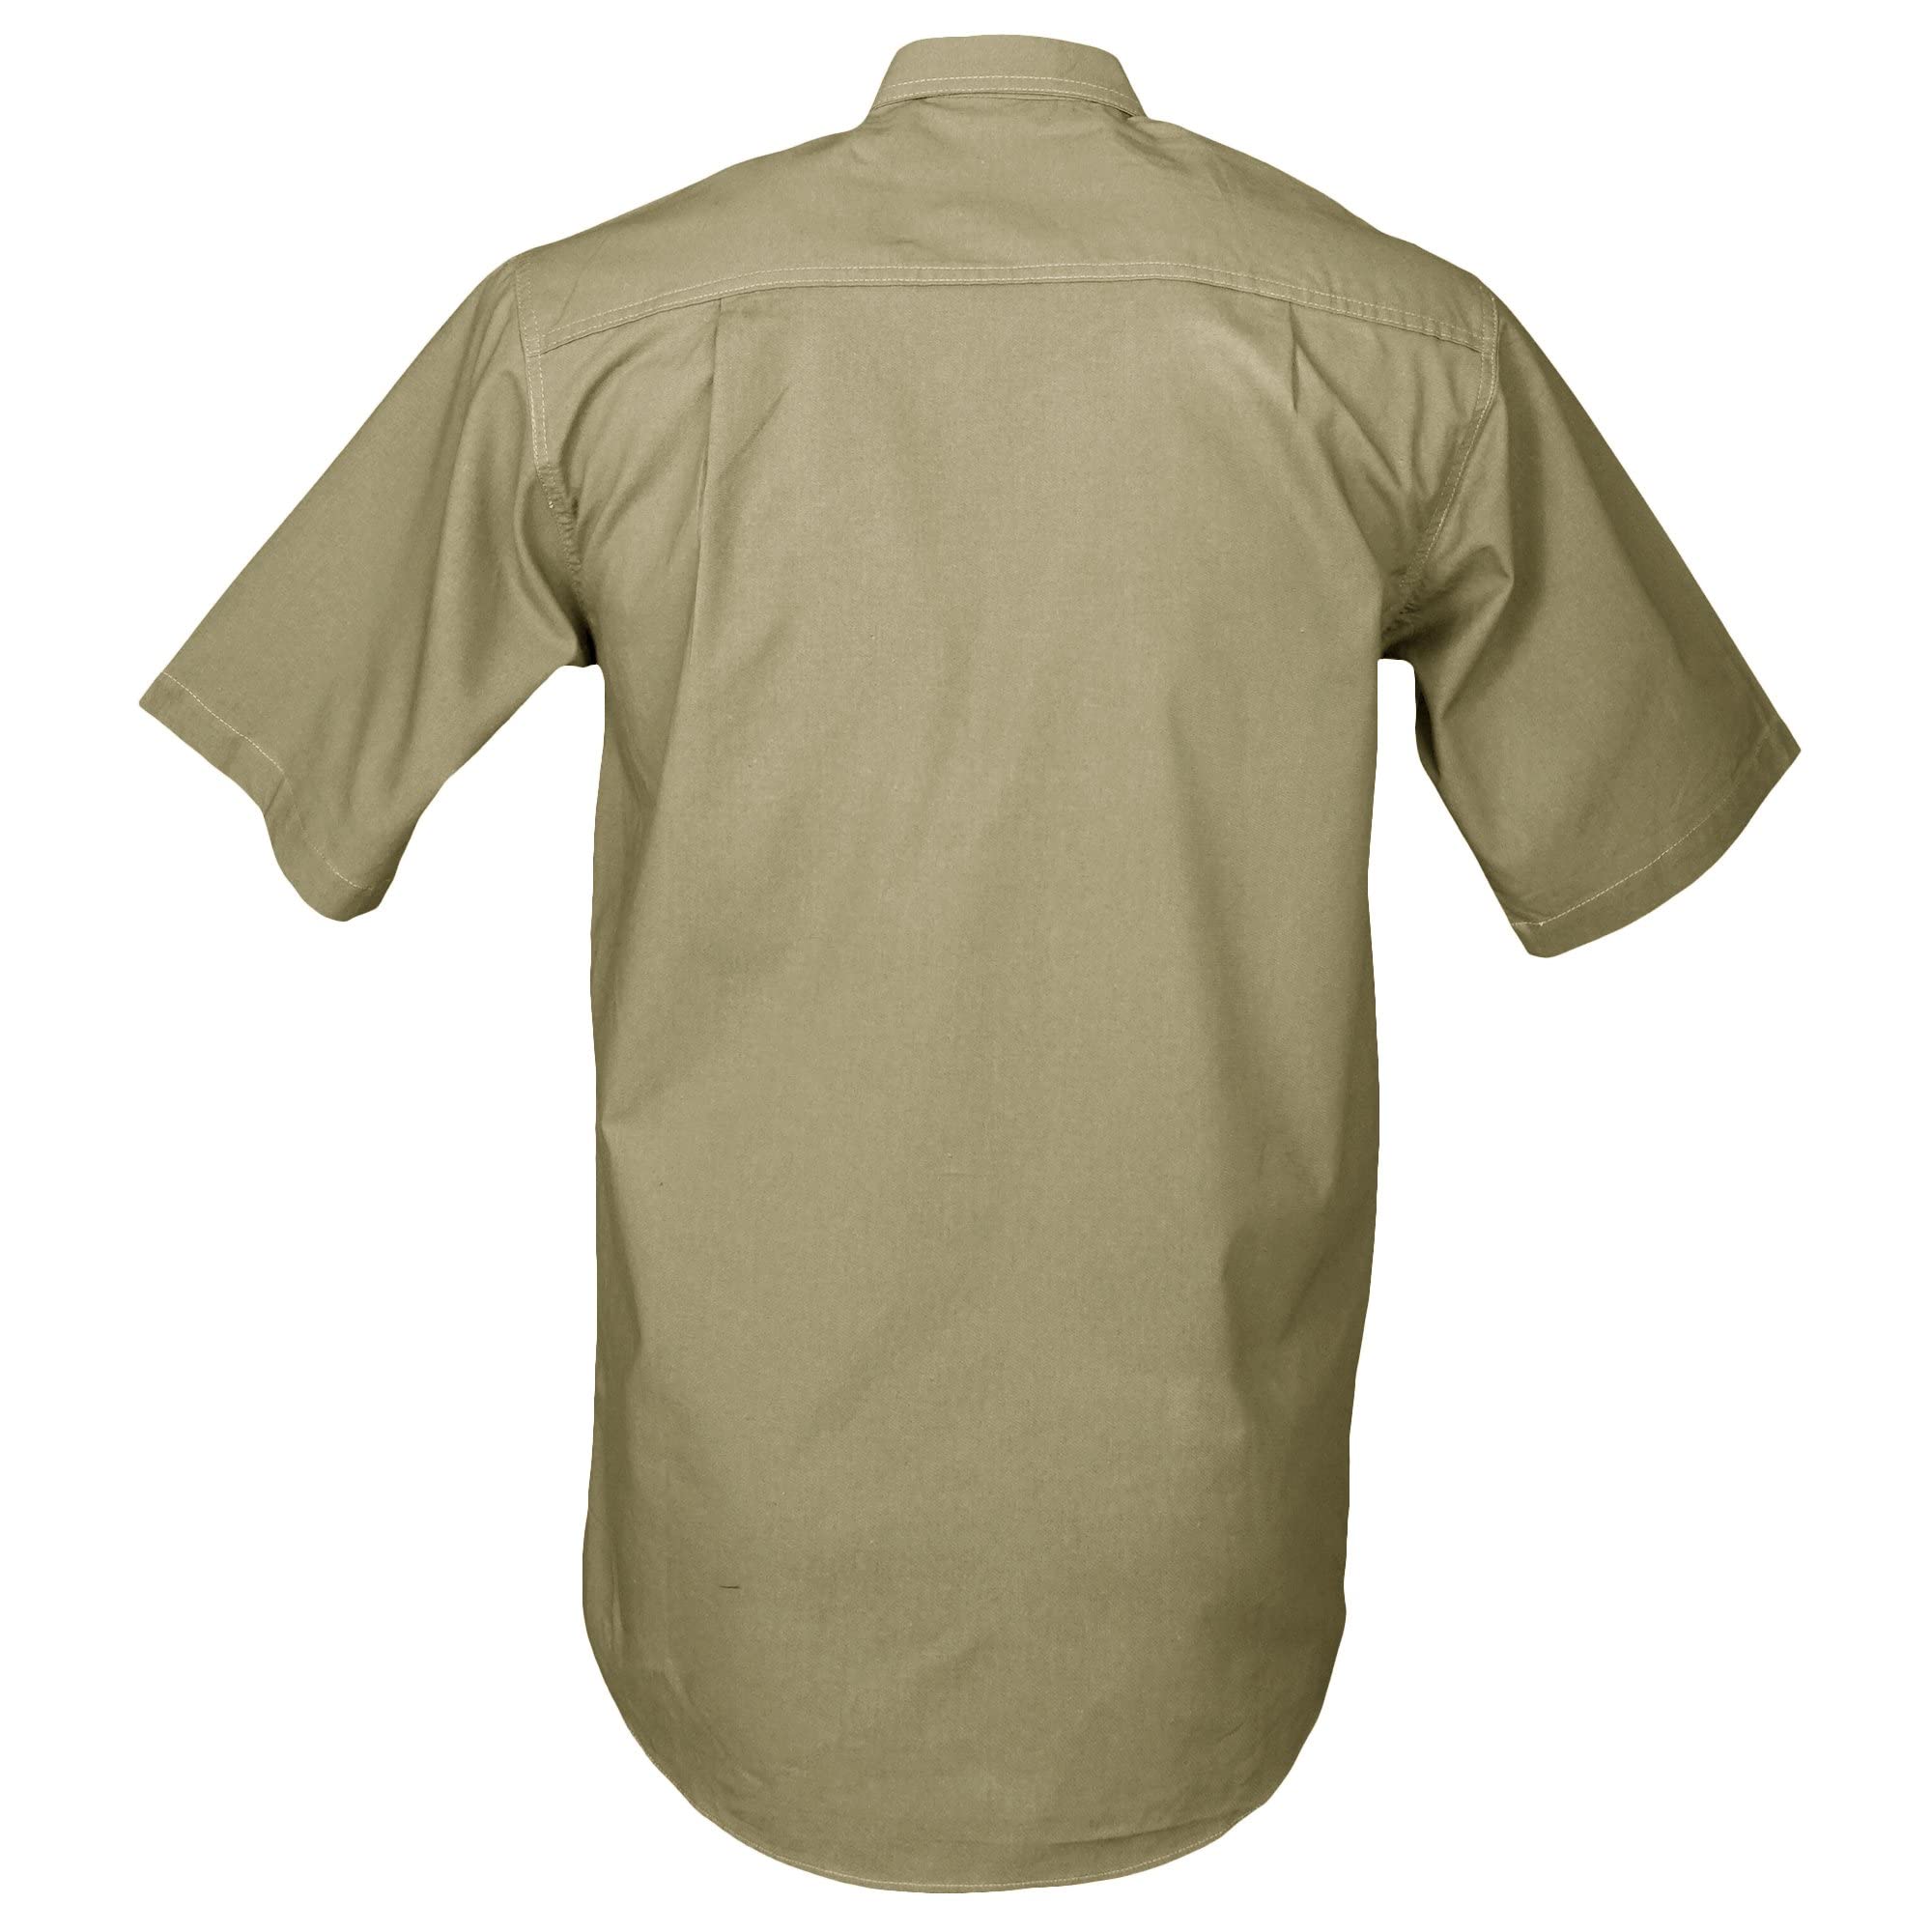 Tag Safari Men's Safari Short Sleeve Shirt W Chest Pockets (Khaki, Medium)